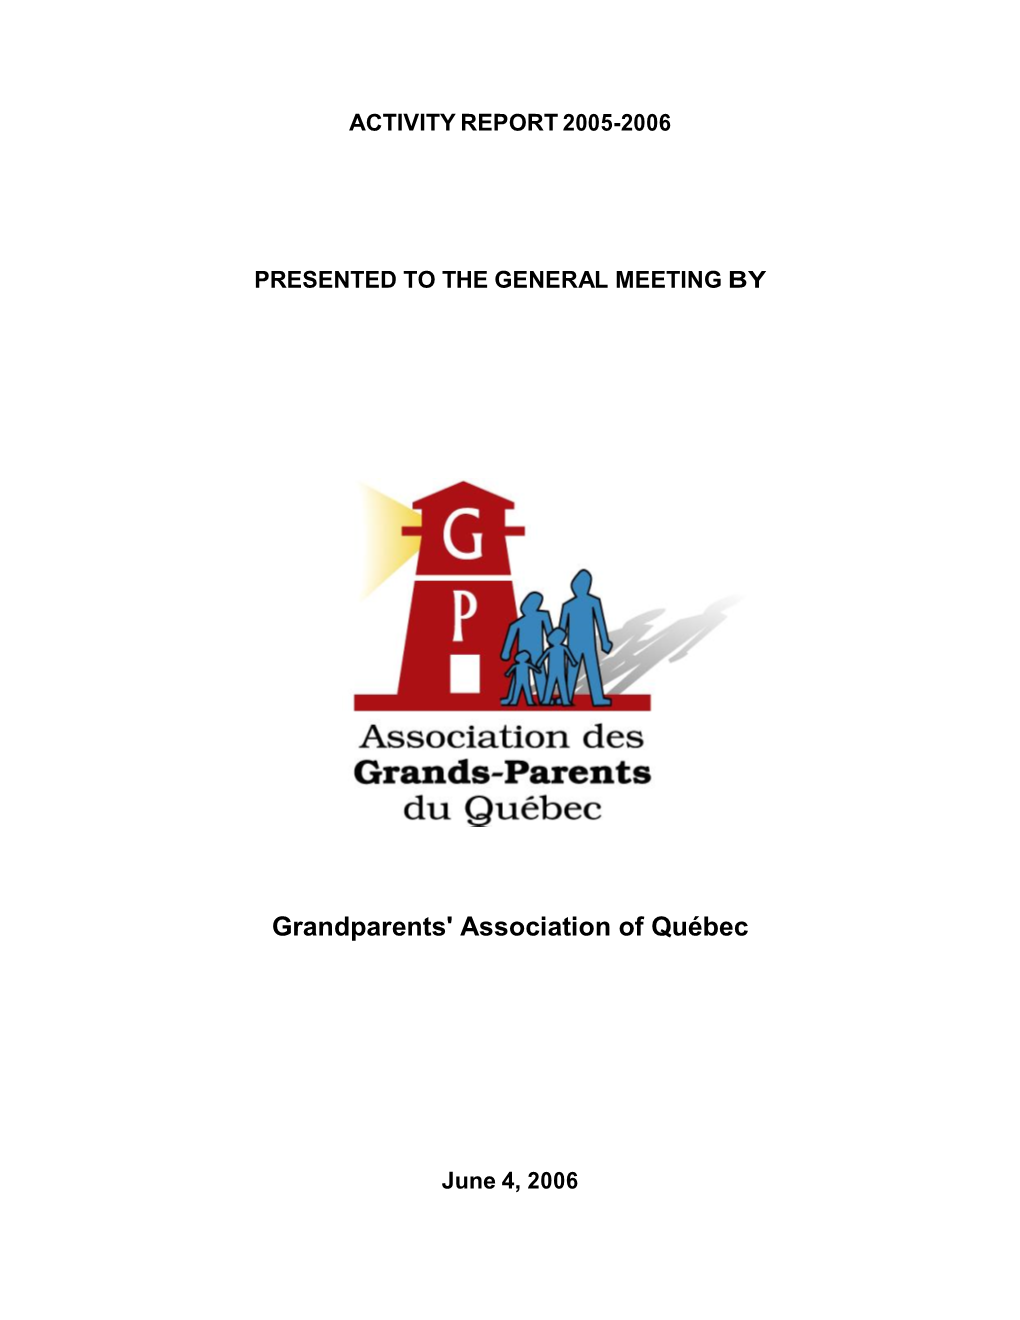 BY Grandparents' Association of Québec